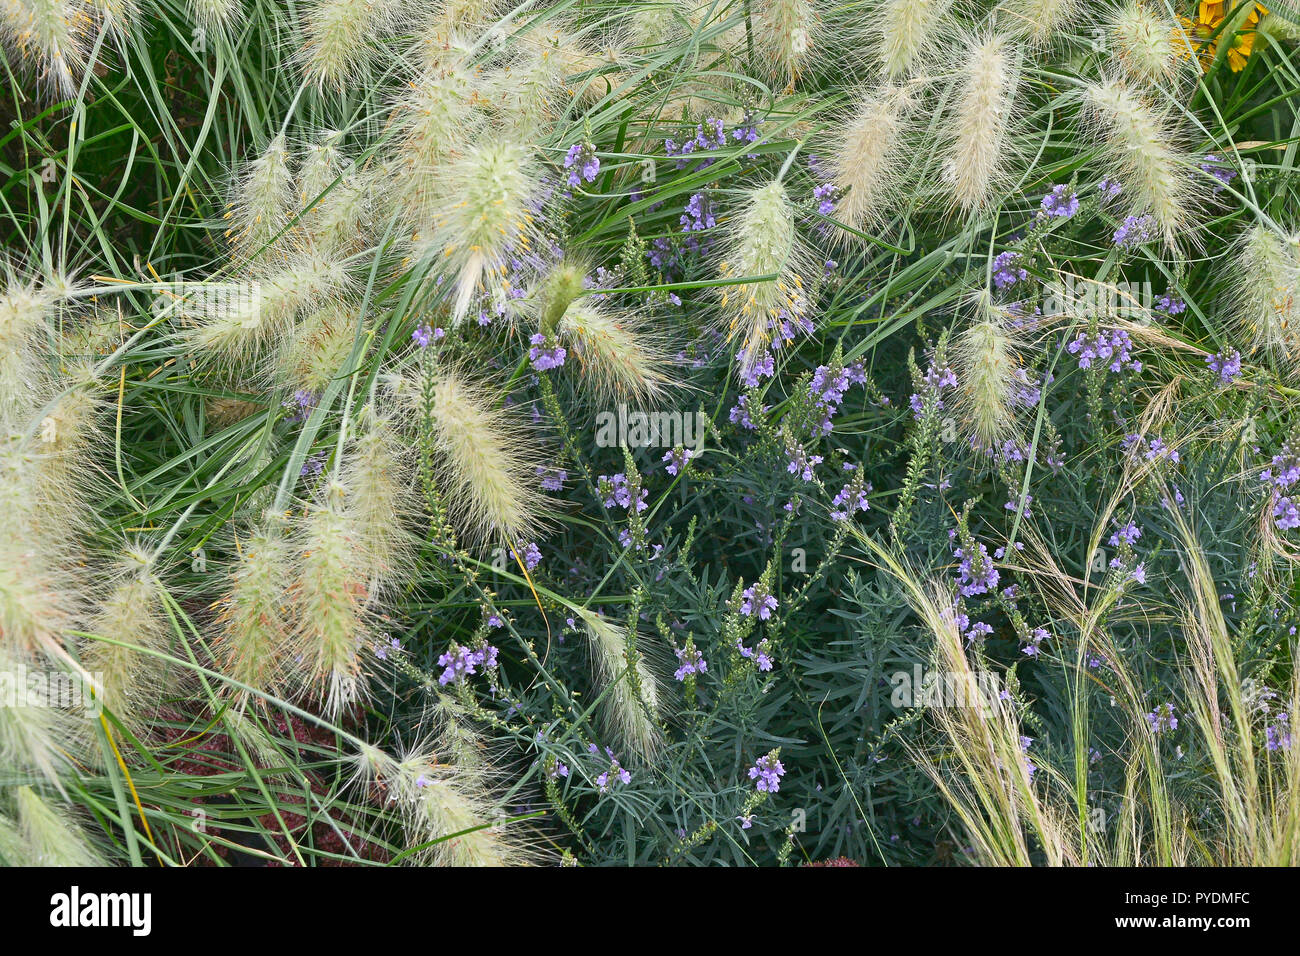 Garden flower border with ornamental grass Pennisetum villosum Stock Photo